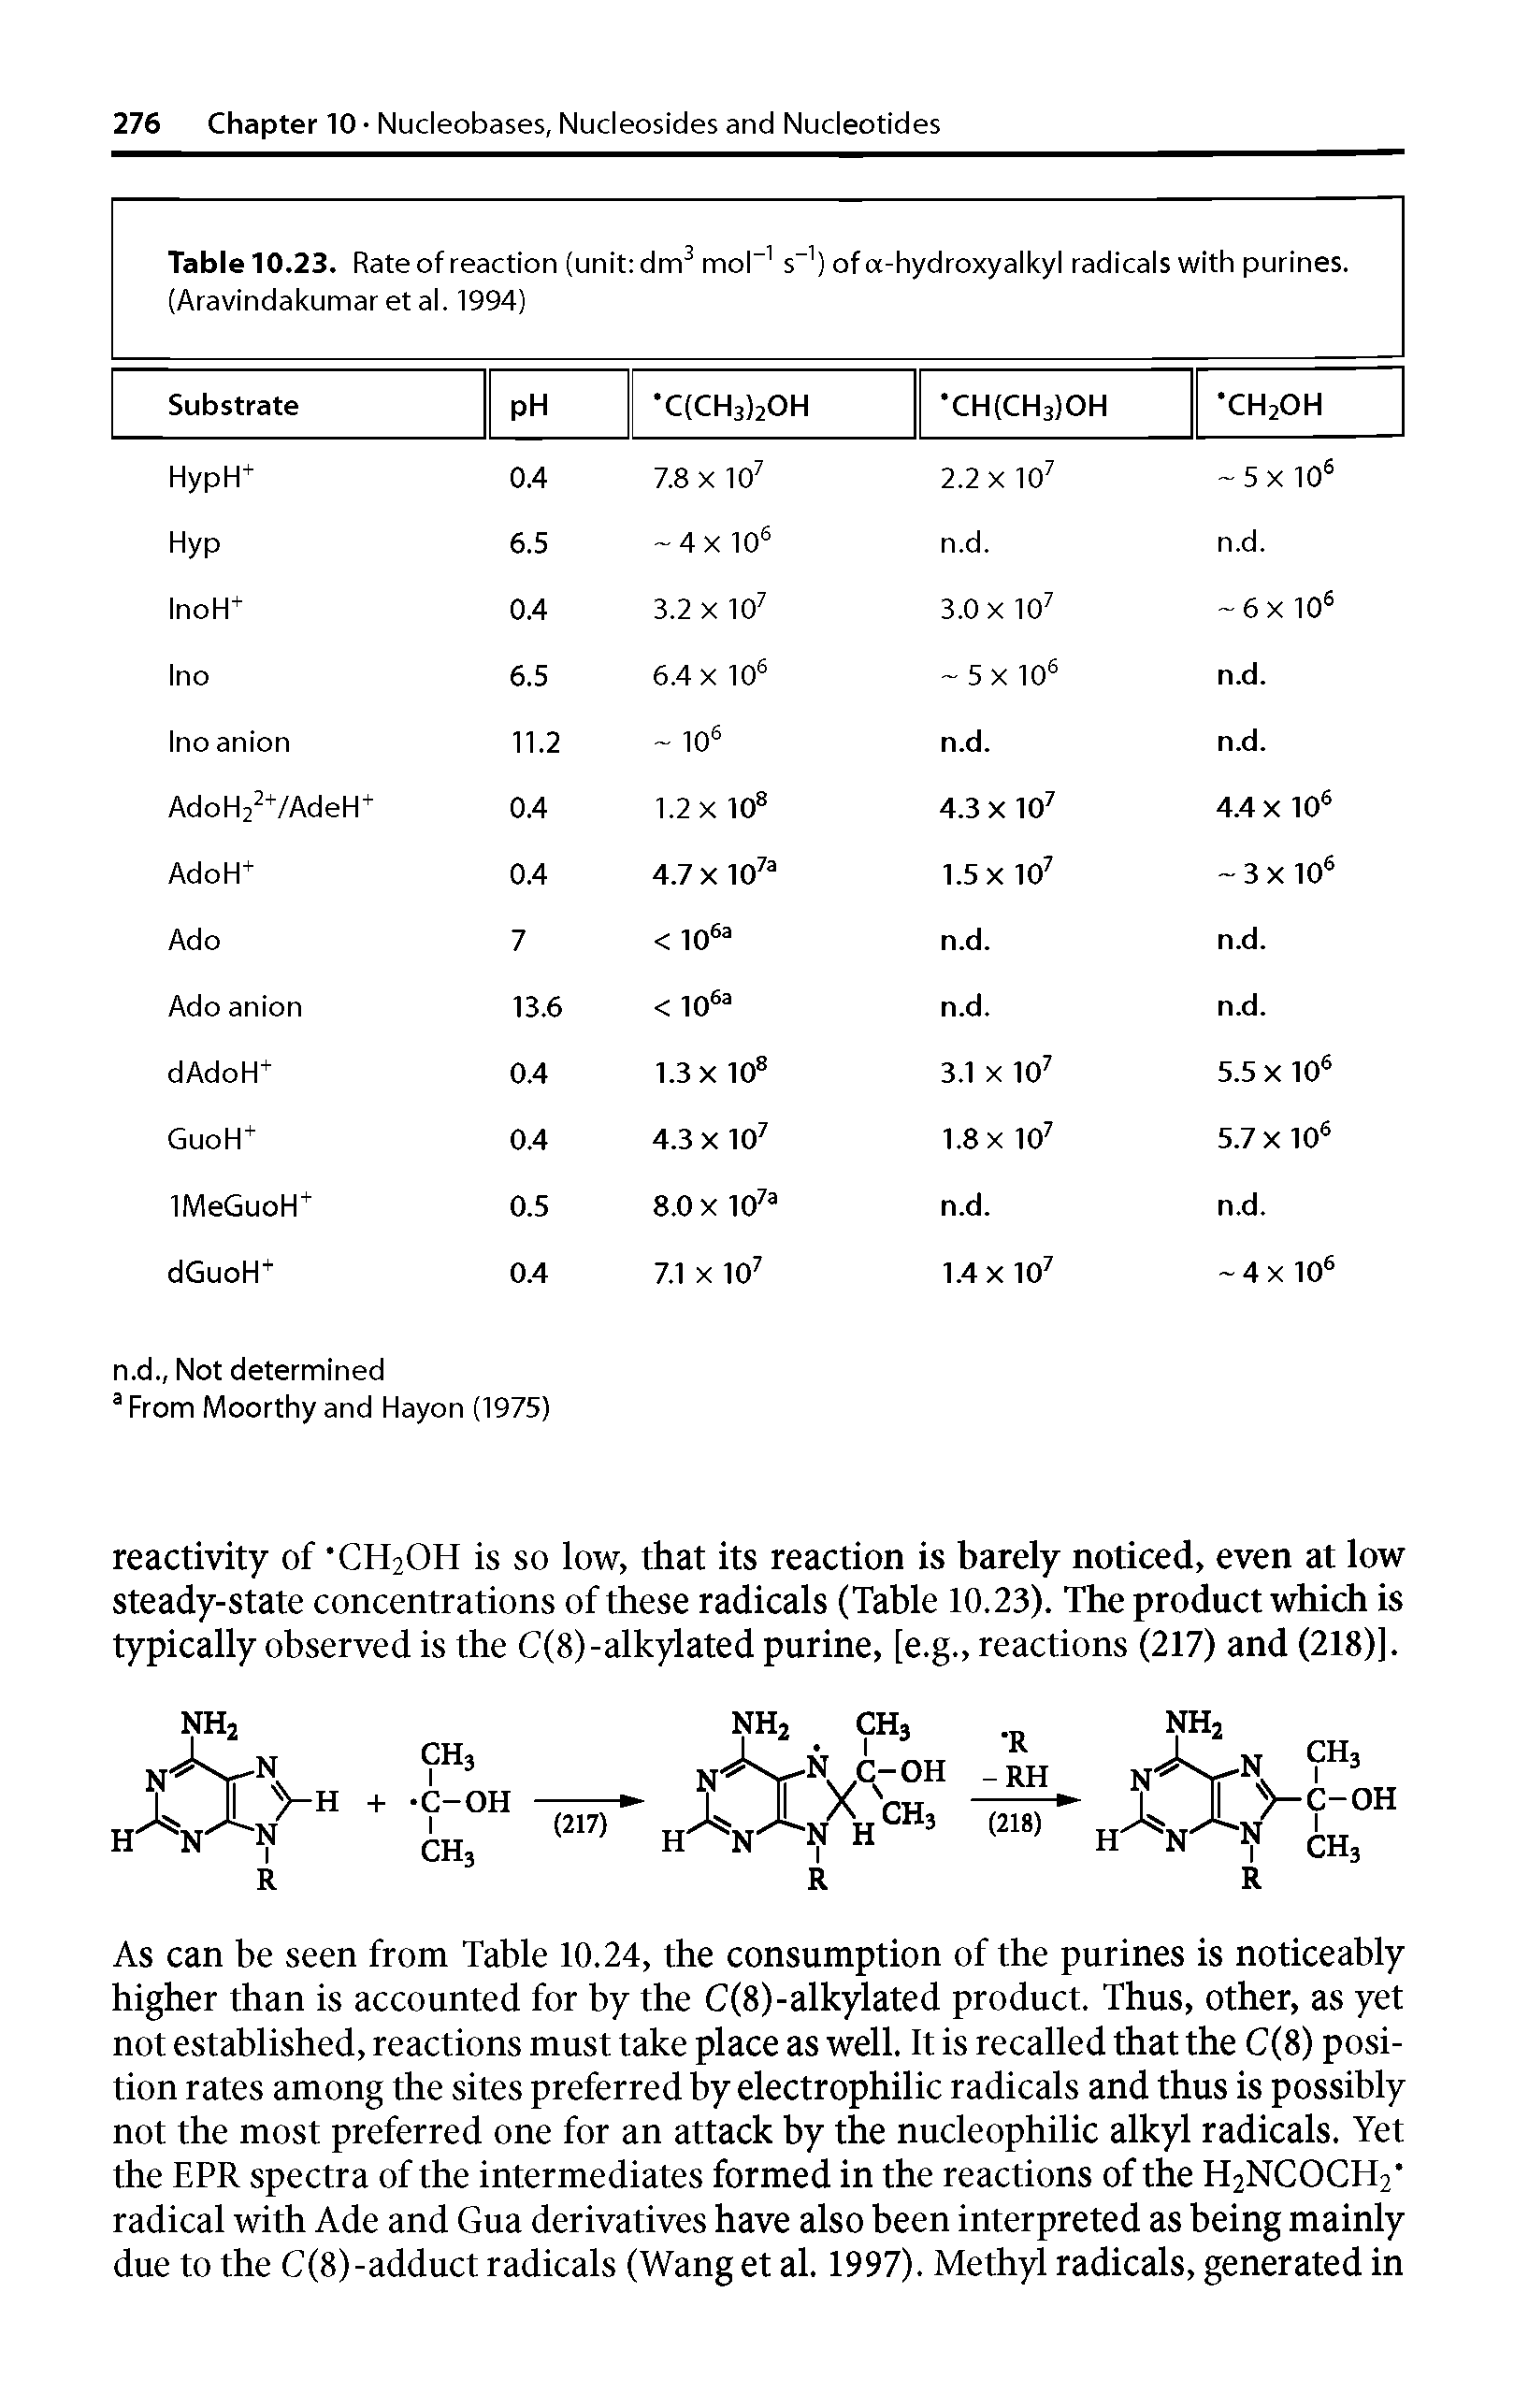 Table10.23. Rateof reaction (unit dm3 mol 1 s ) of a-hydroxyalkyl radicals with purines. (Aravindakumar et al. 1994) ...